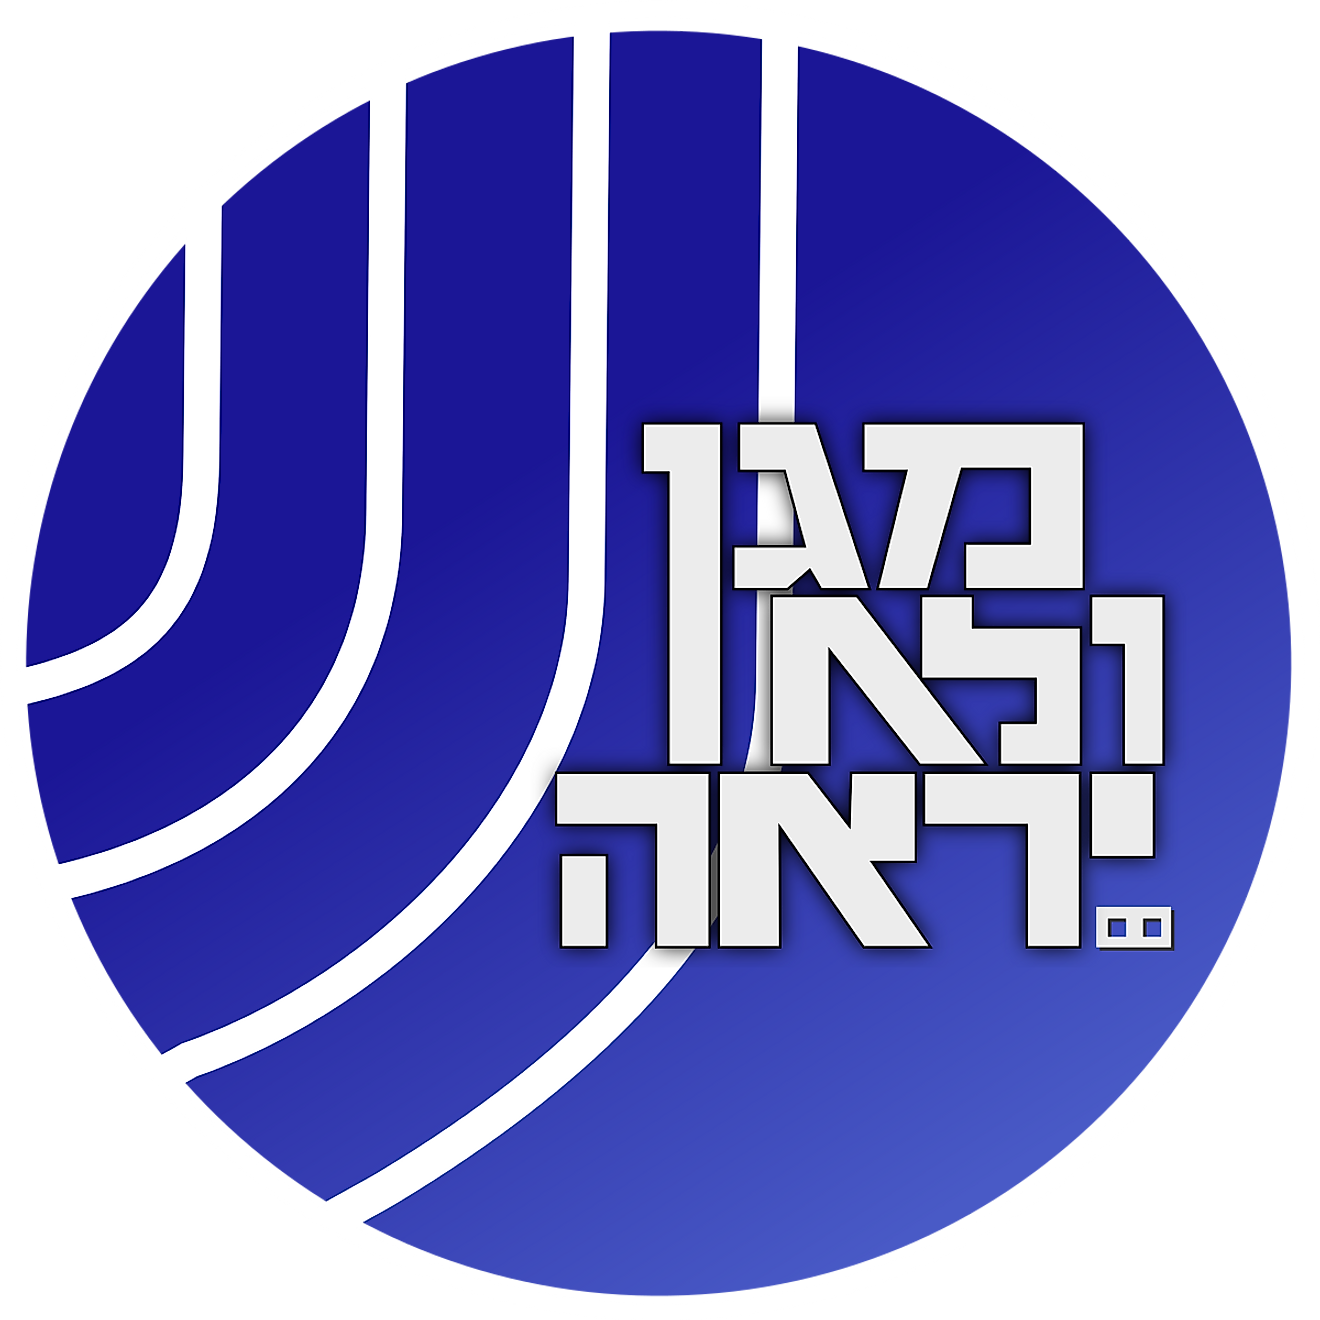 The emblem of Shin Bet. 